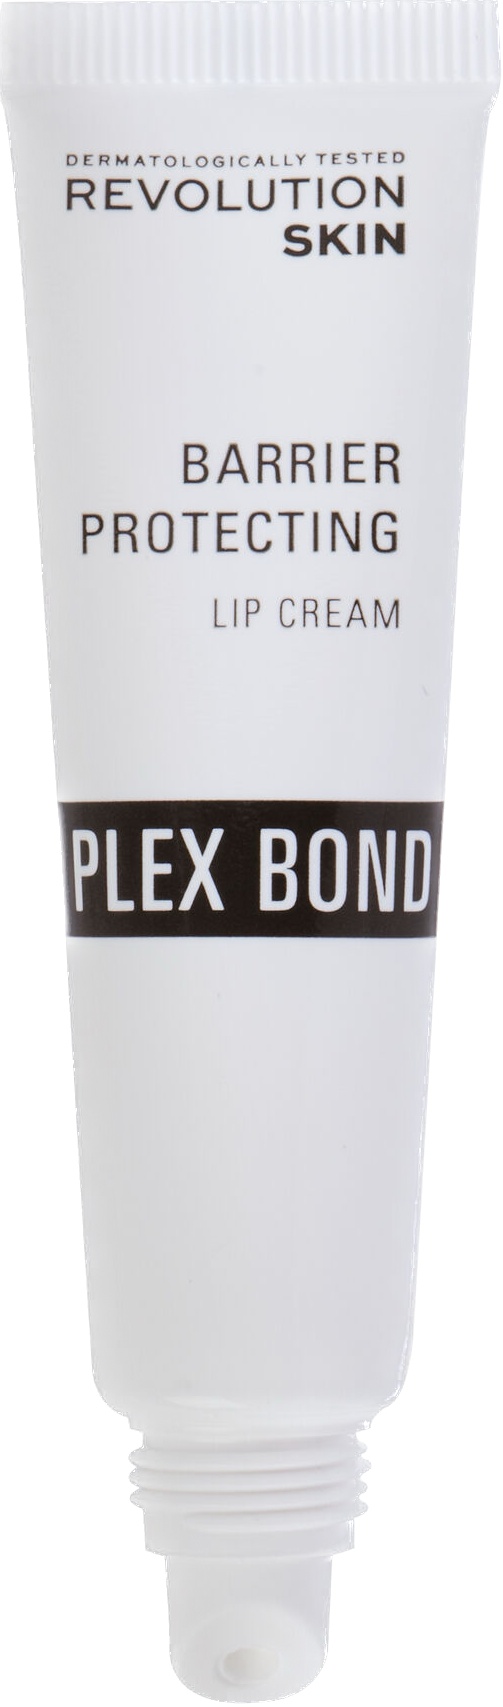 Revolution Skincare Plex Bond Barrier Protecting Lip Cream